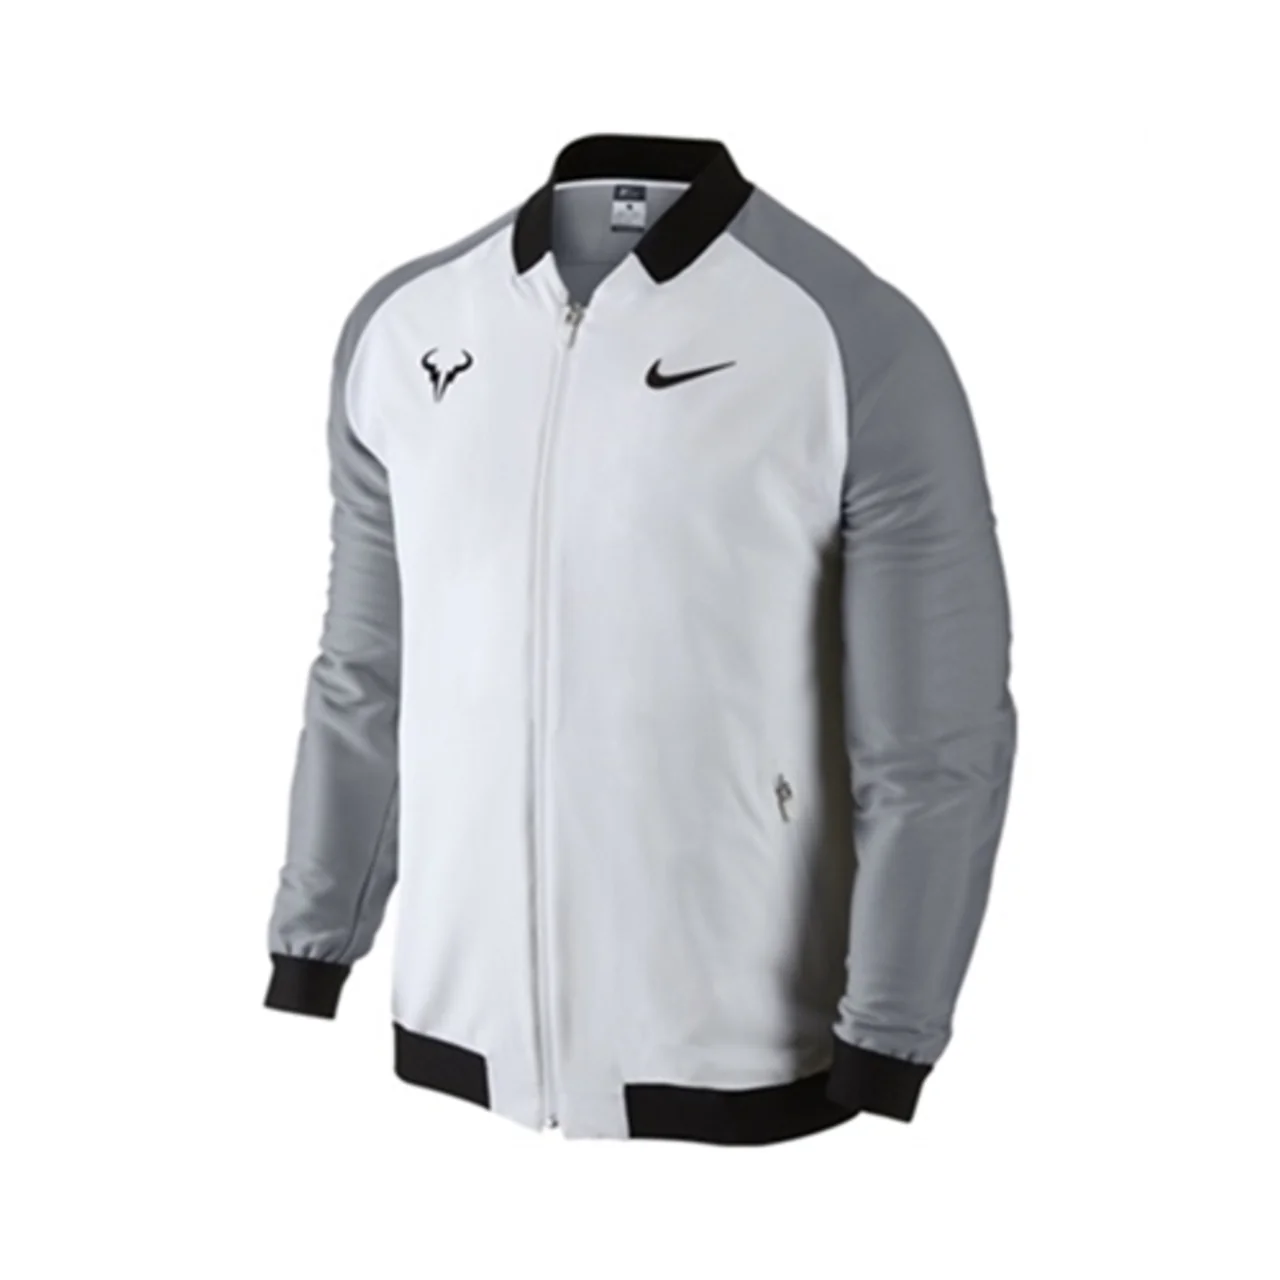 Nike Rafa Premier Jacket Size S